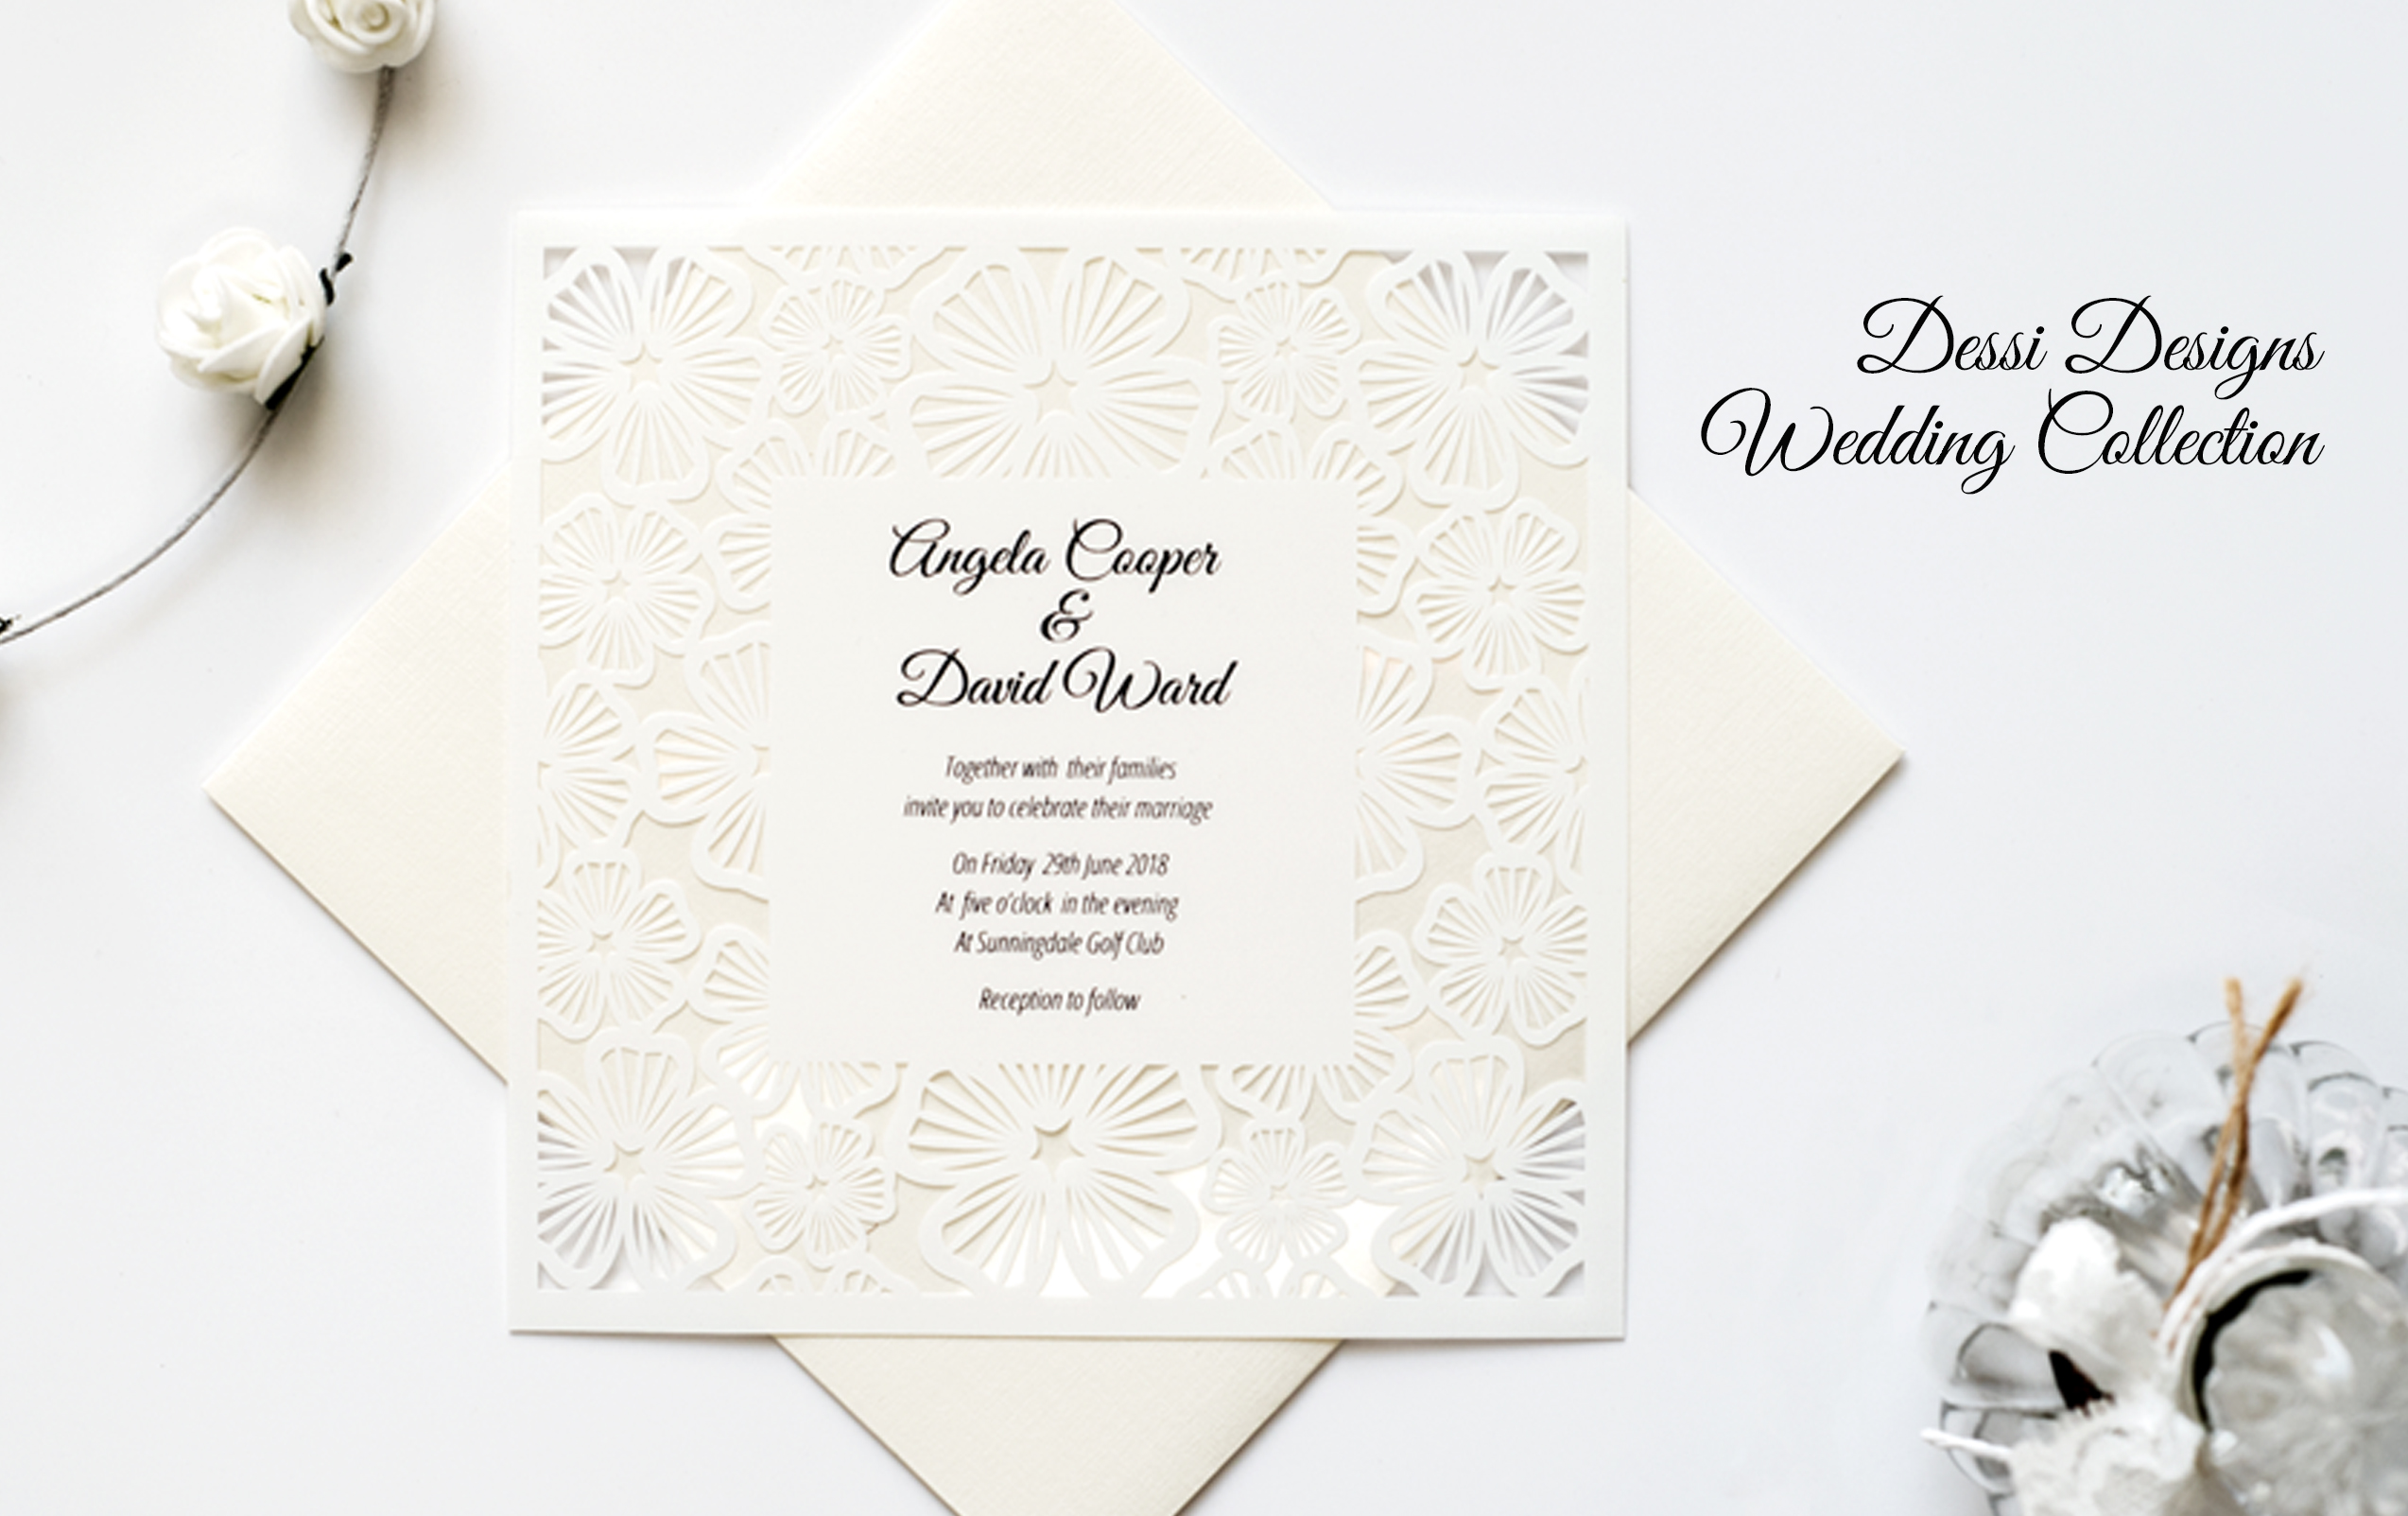 Dessi Designs Wedding